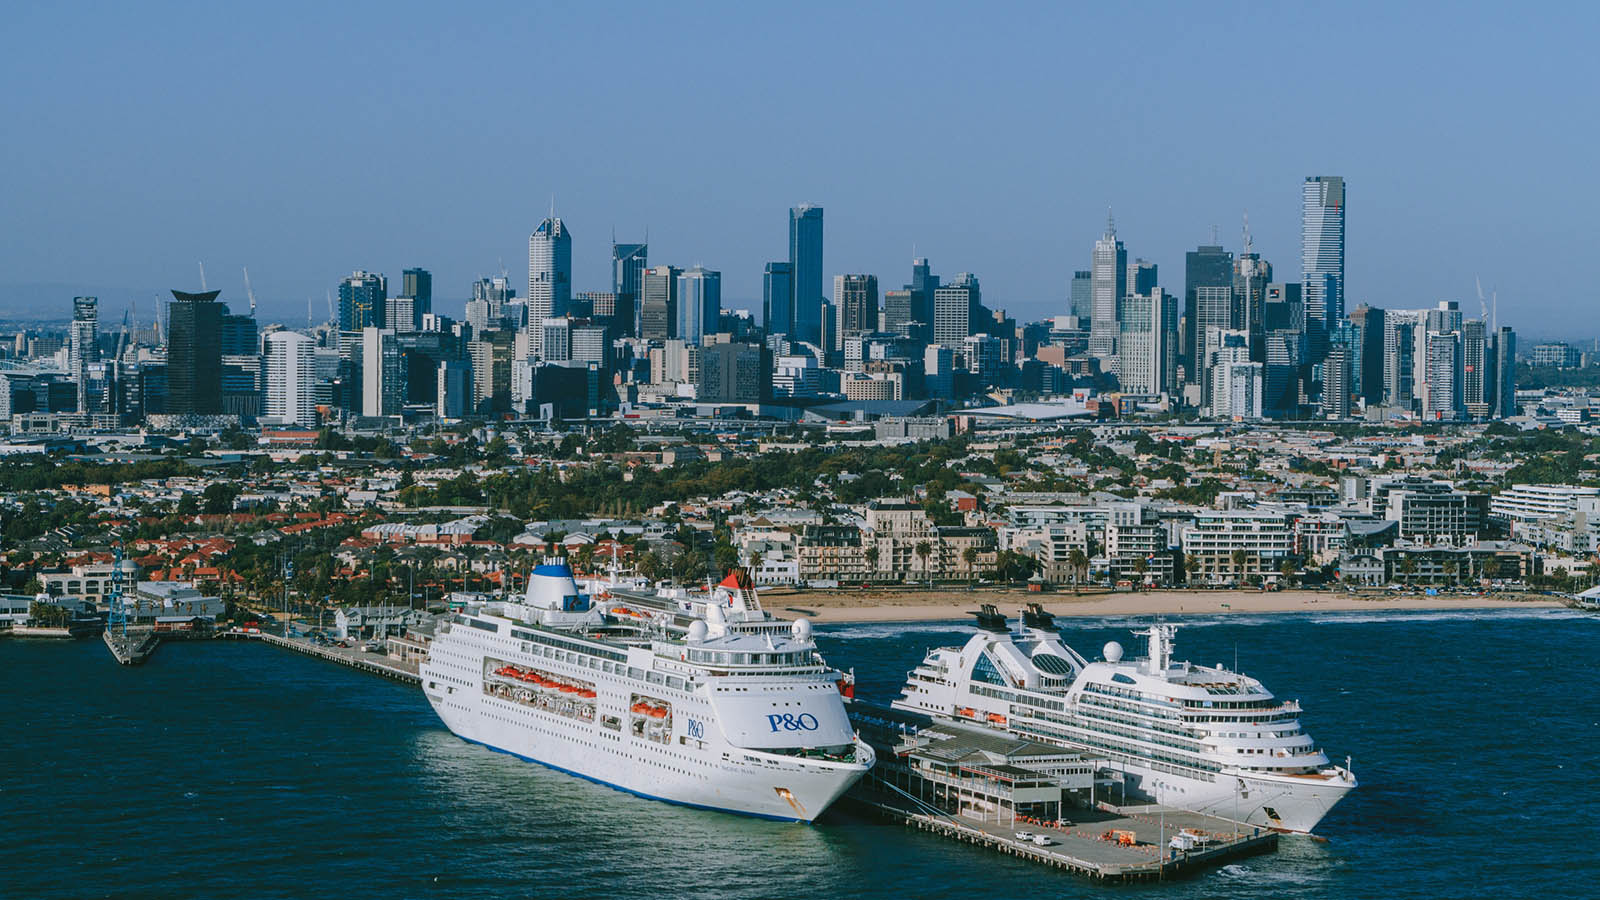 Cruise ships at Port Melbourne, Victoria, Australia